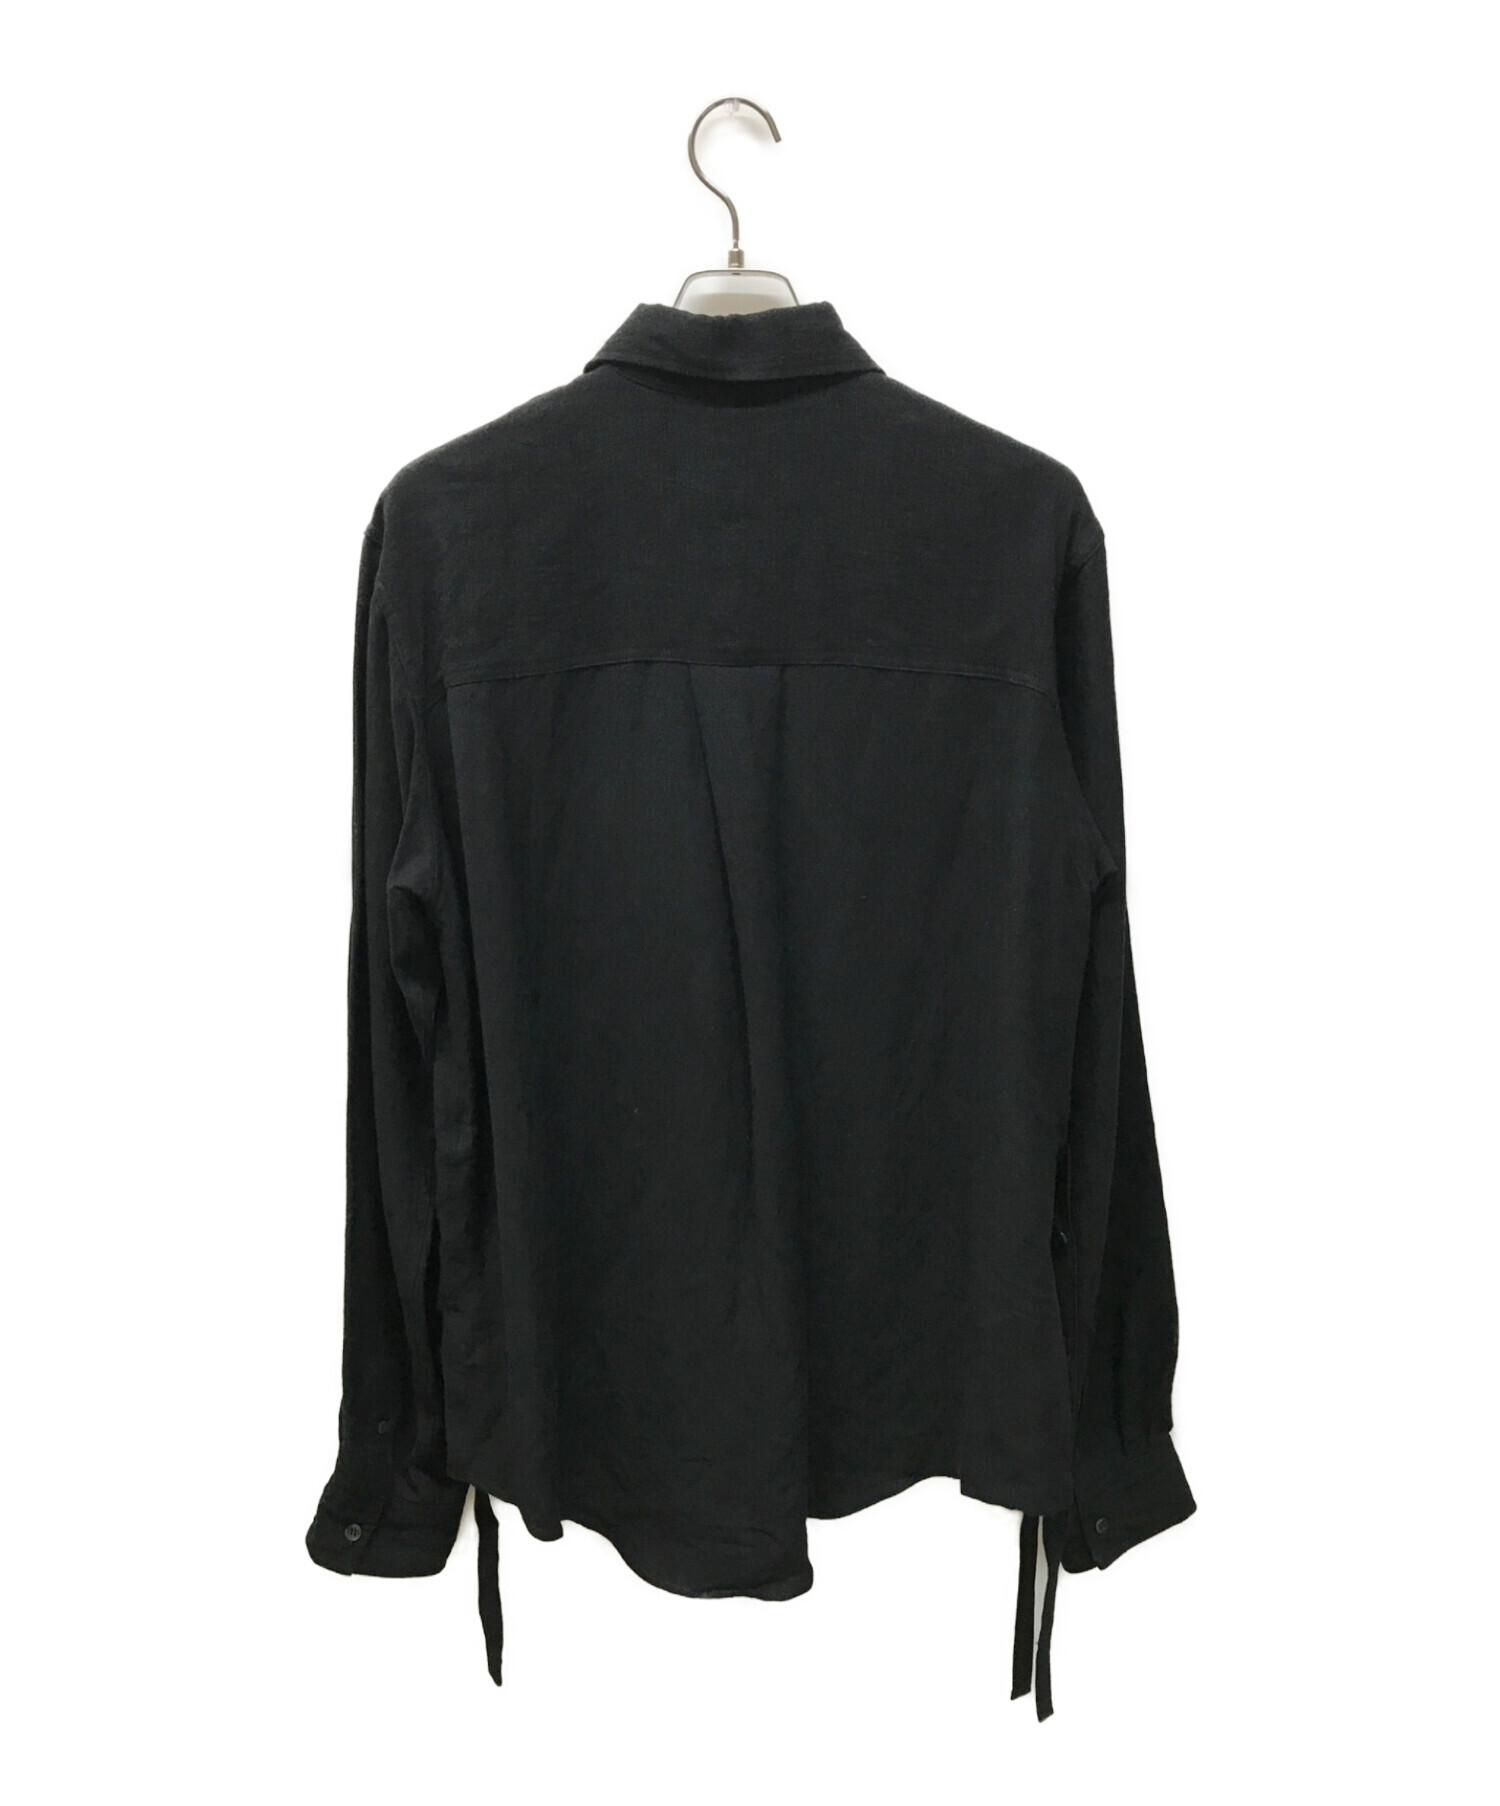 SOSHIOTSUKI (ソウシ オオツキ) KIMONO BREASTED SHIRTS キモノブレステッドシャツ SSGNSH01 ブラック  サイズ:44